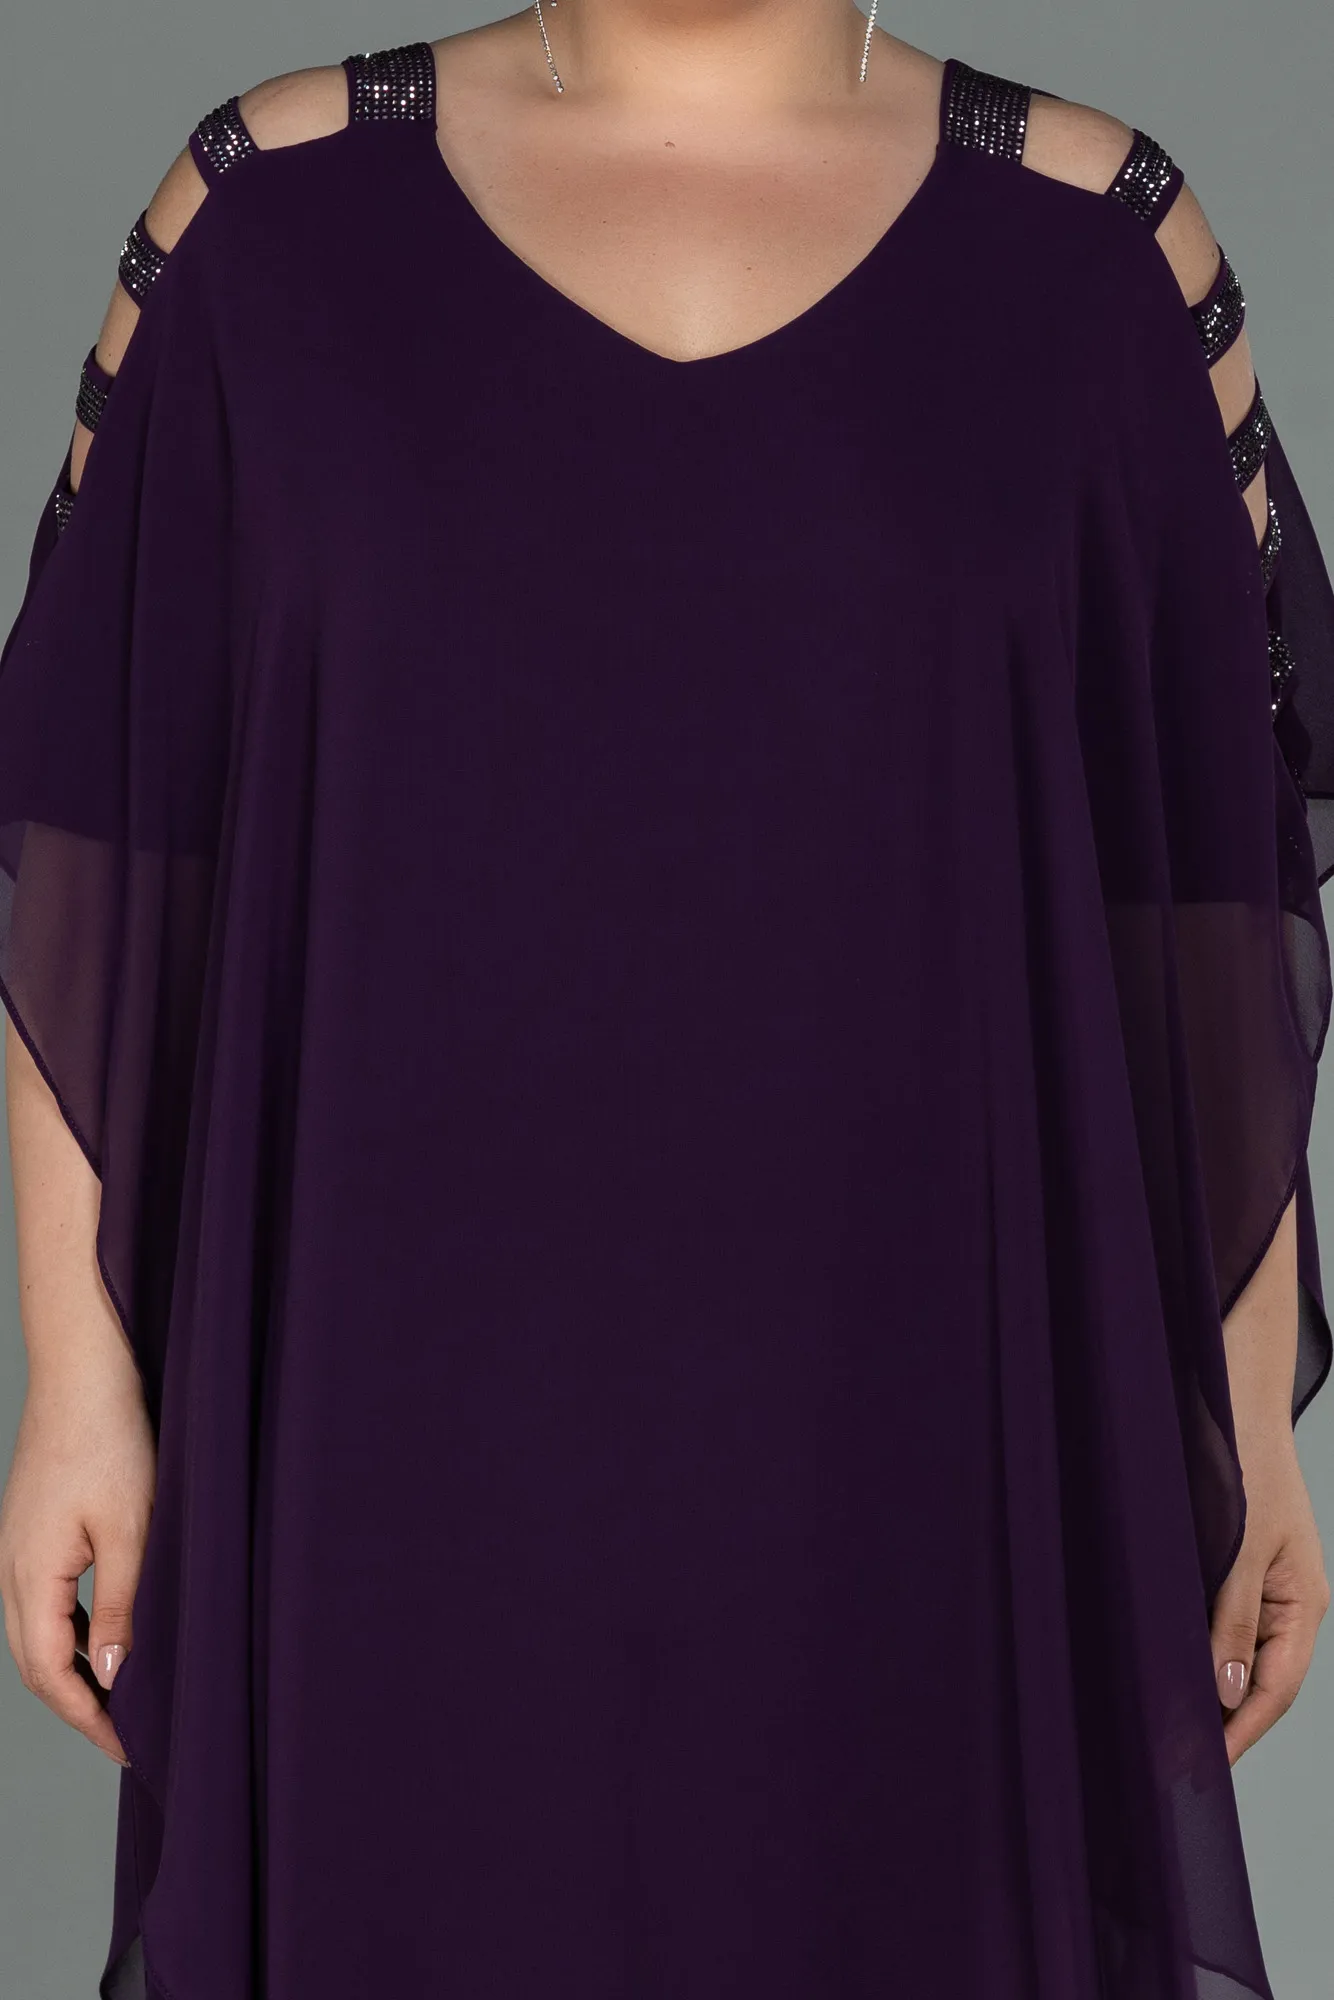 Purple-Chiffon Plus Size Evening Dress ABT080